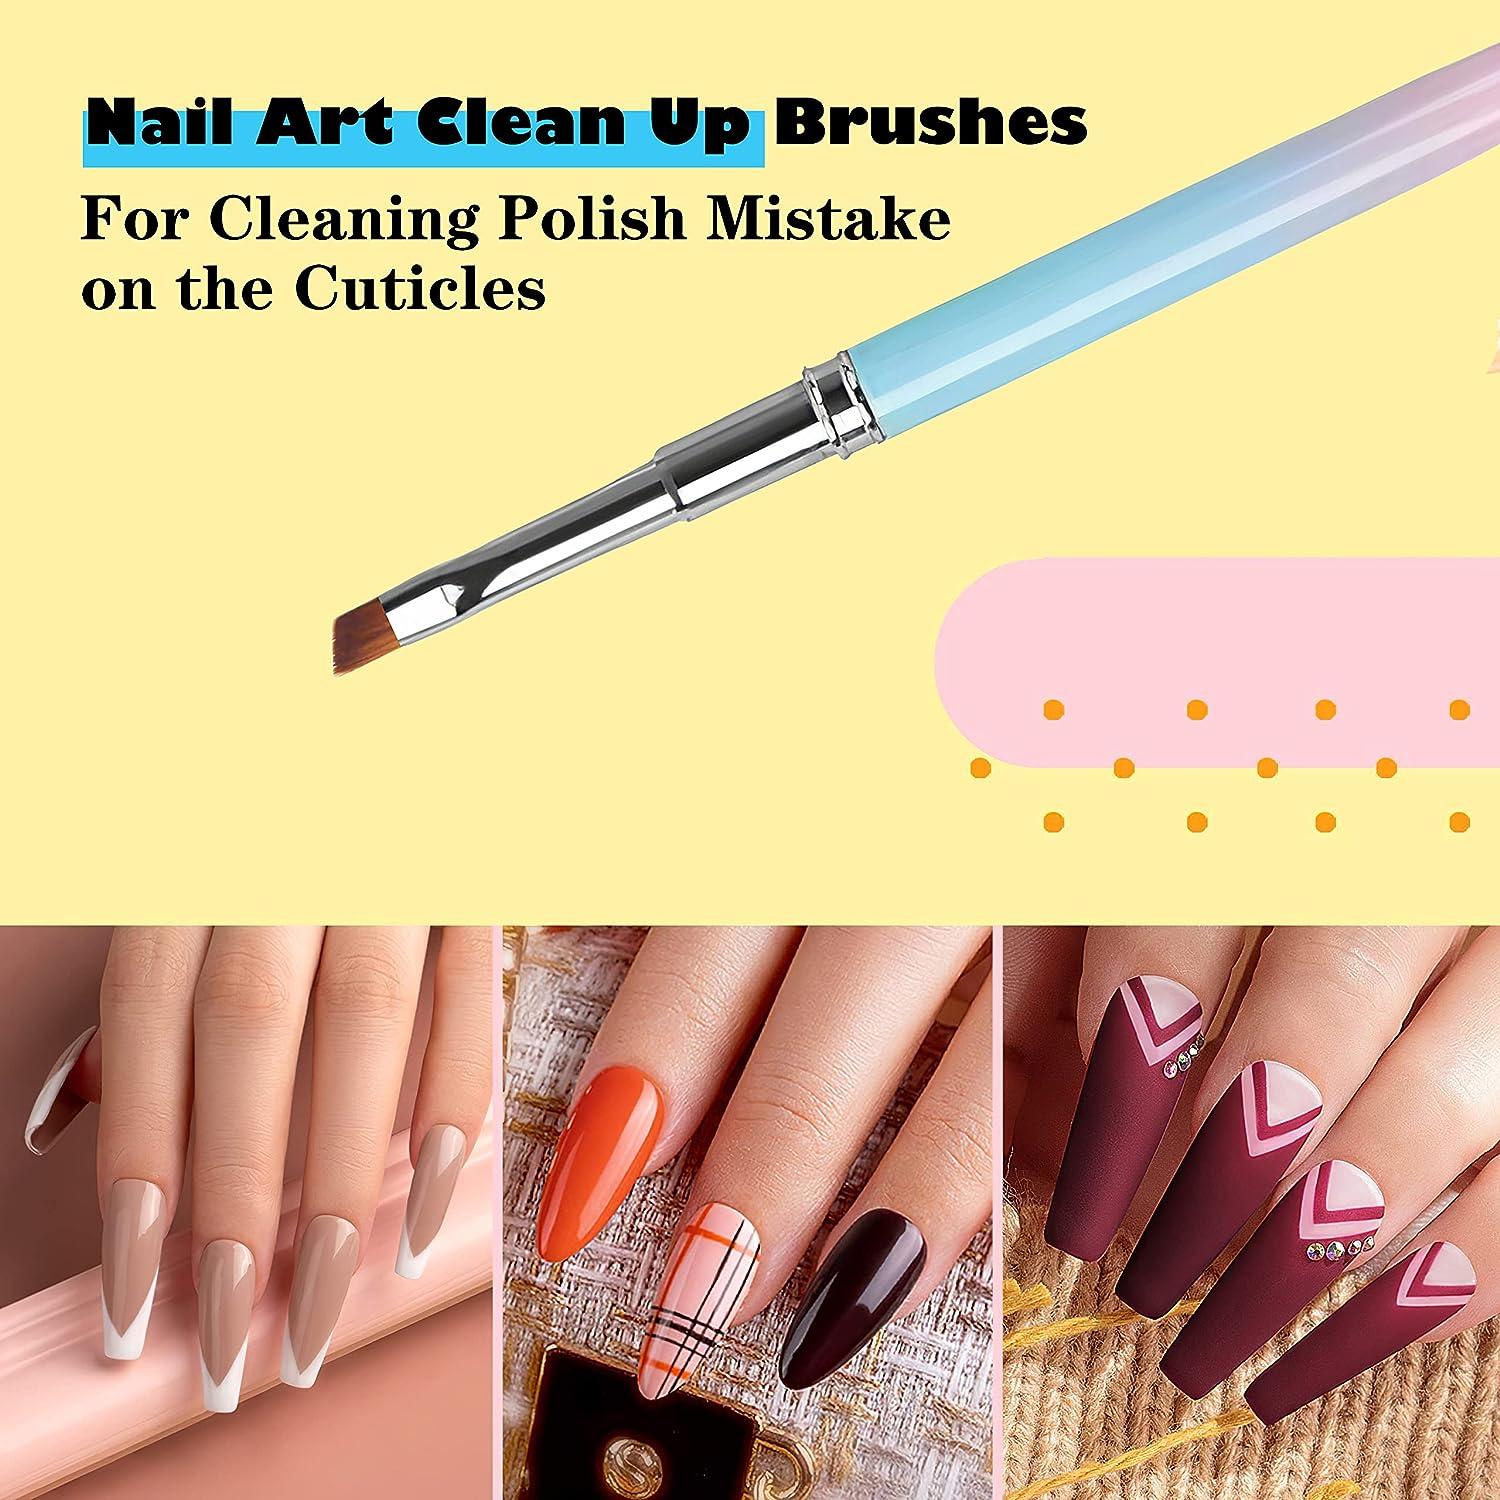 How to Remove Glitter Nail Polish | Beautylish